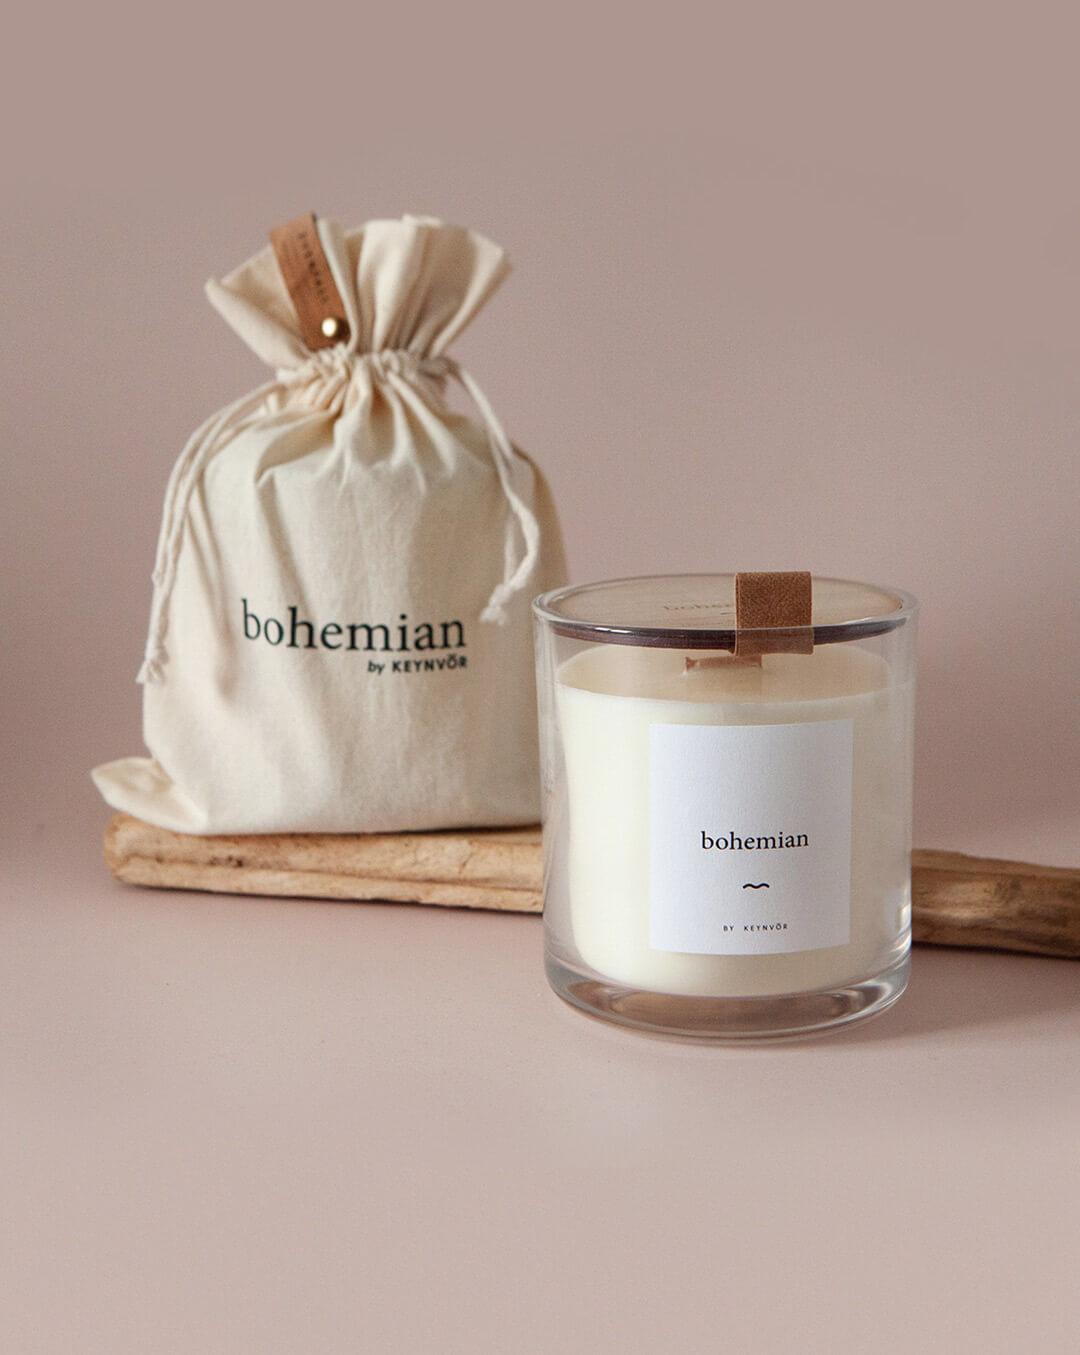 Bohemian candle range by Keynvor